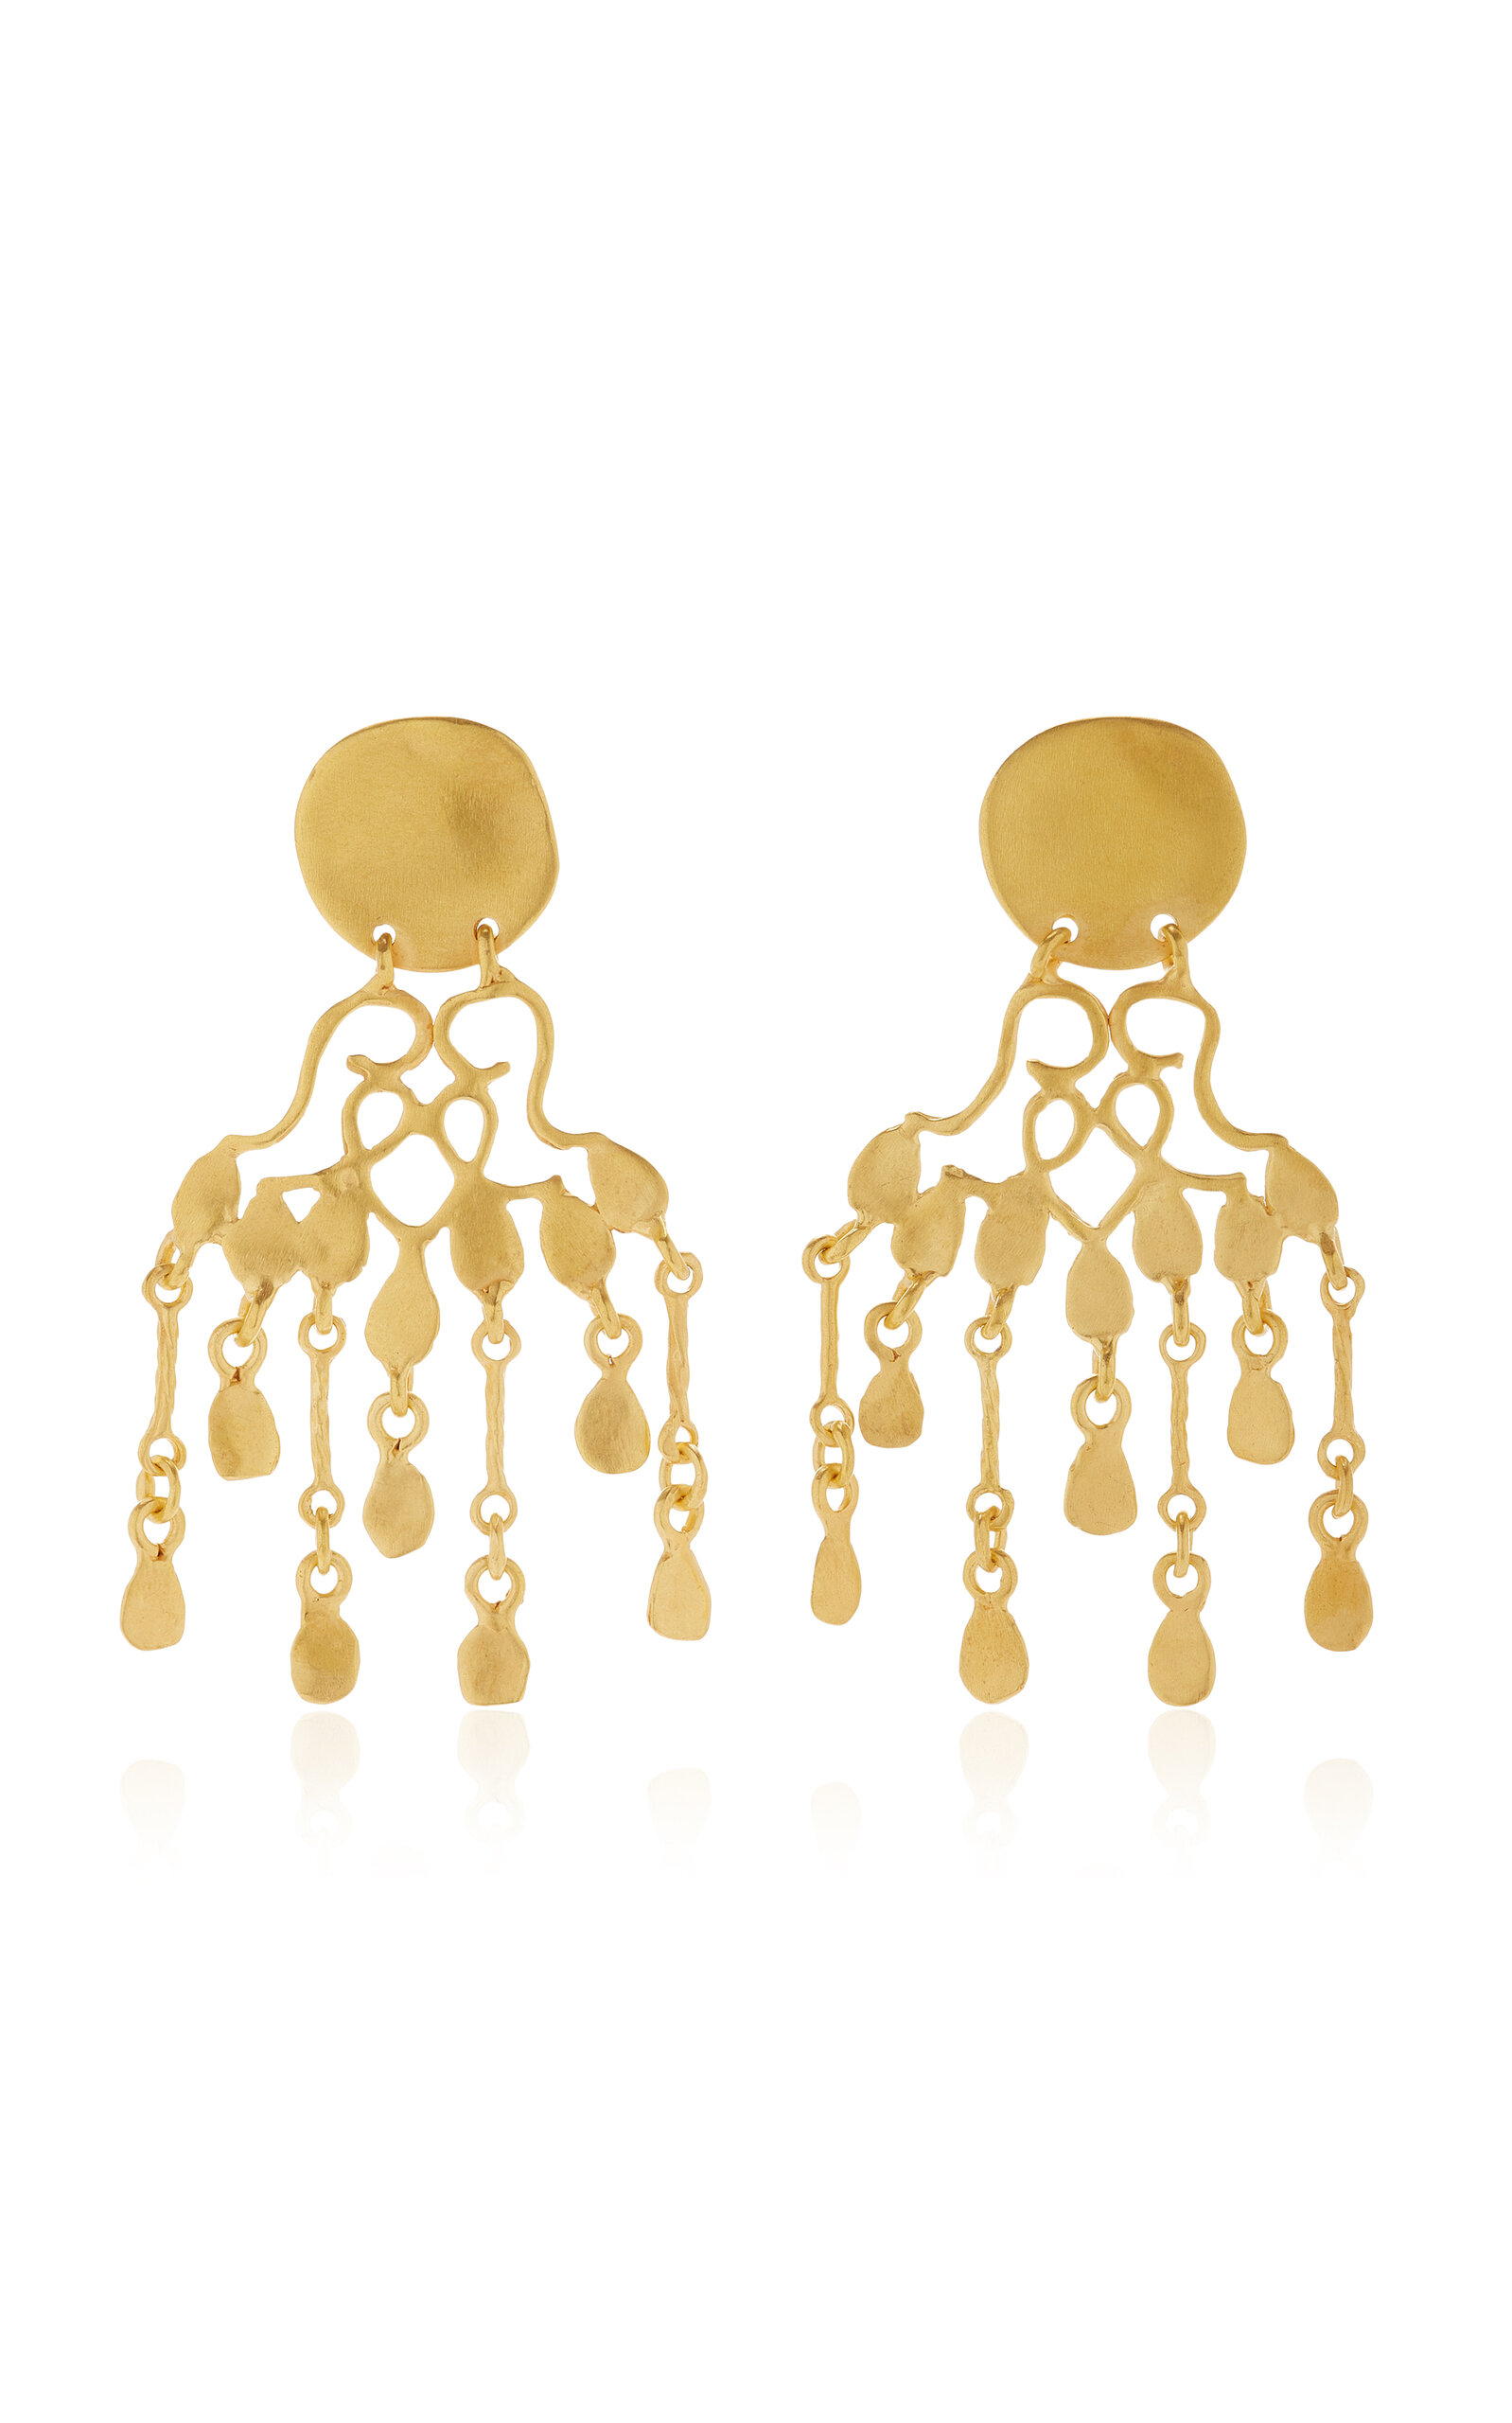 Cano Sikuani 24k Gold-plated Earrings